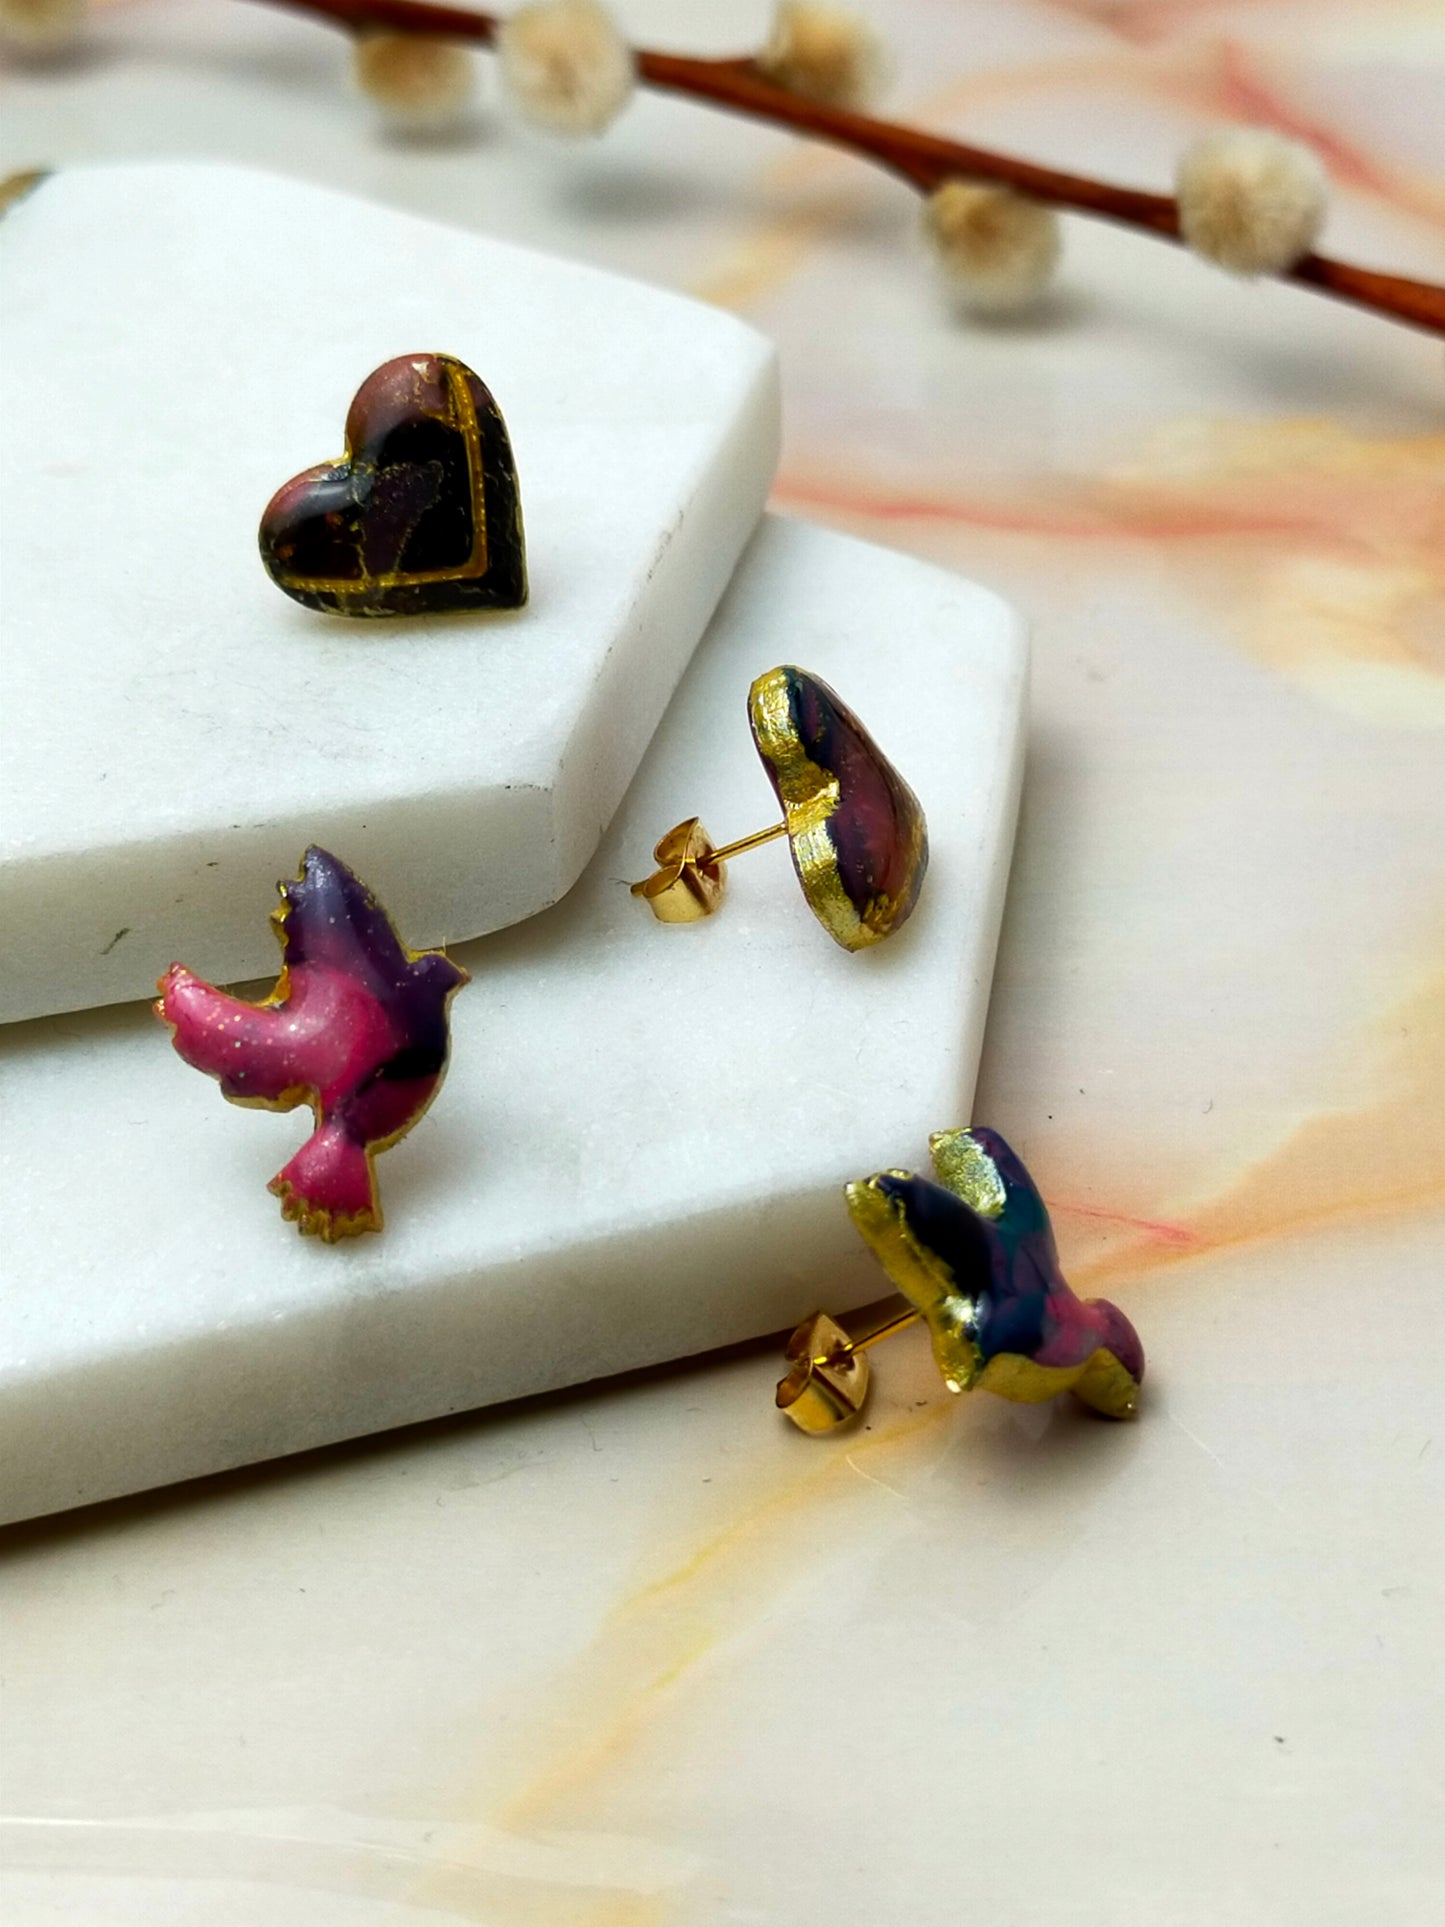 "Paloma" 2 Pack Set - Hearts Stud Earrings and Love Bird Stud Earrings